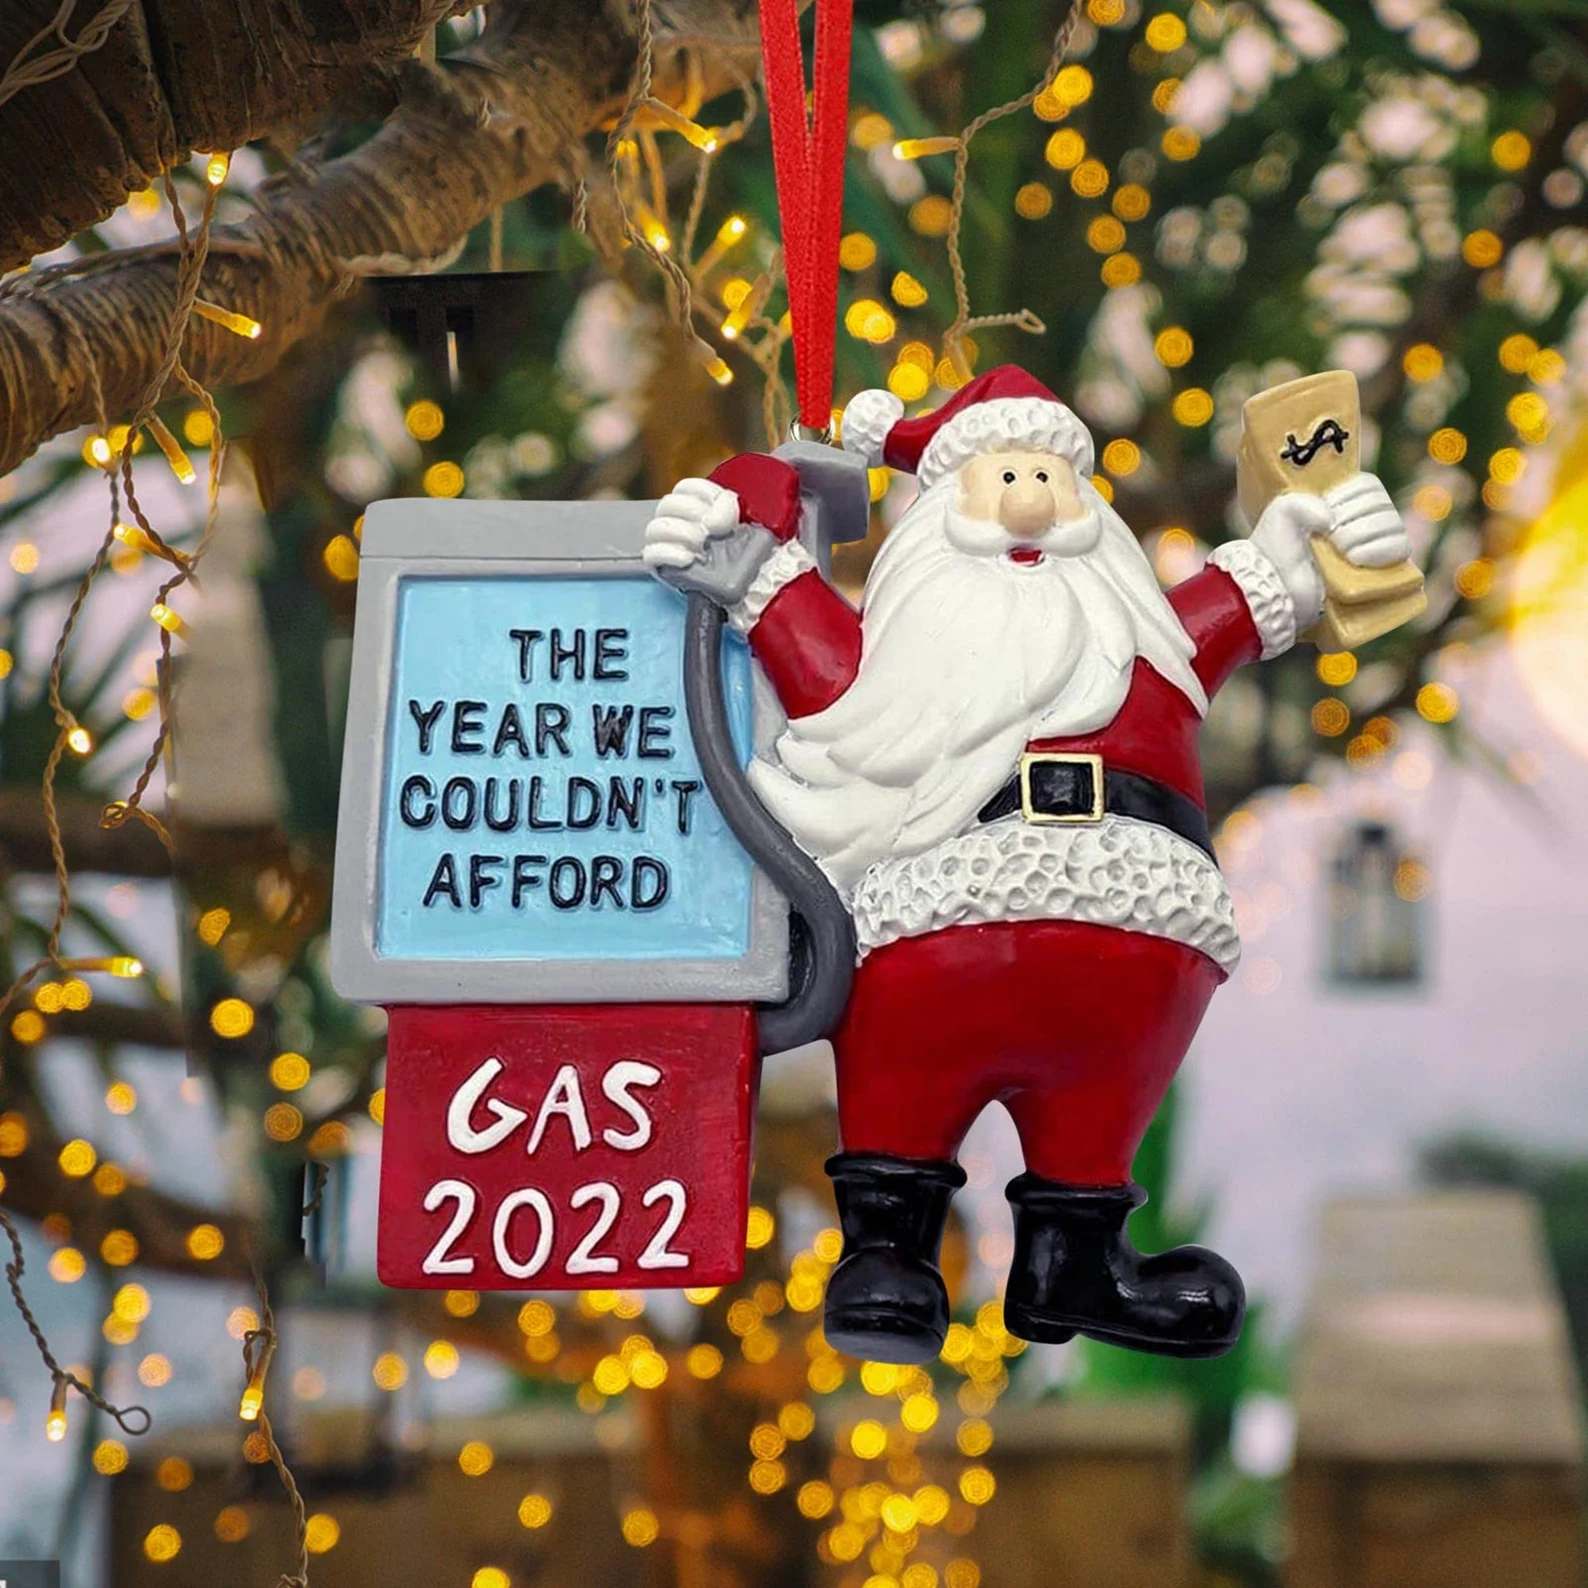 2022 Sarcastic Christmas Ornament- Santa Claus Sends You Gas